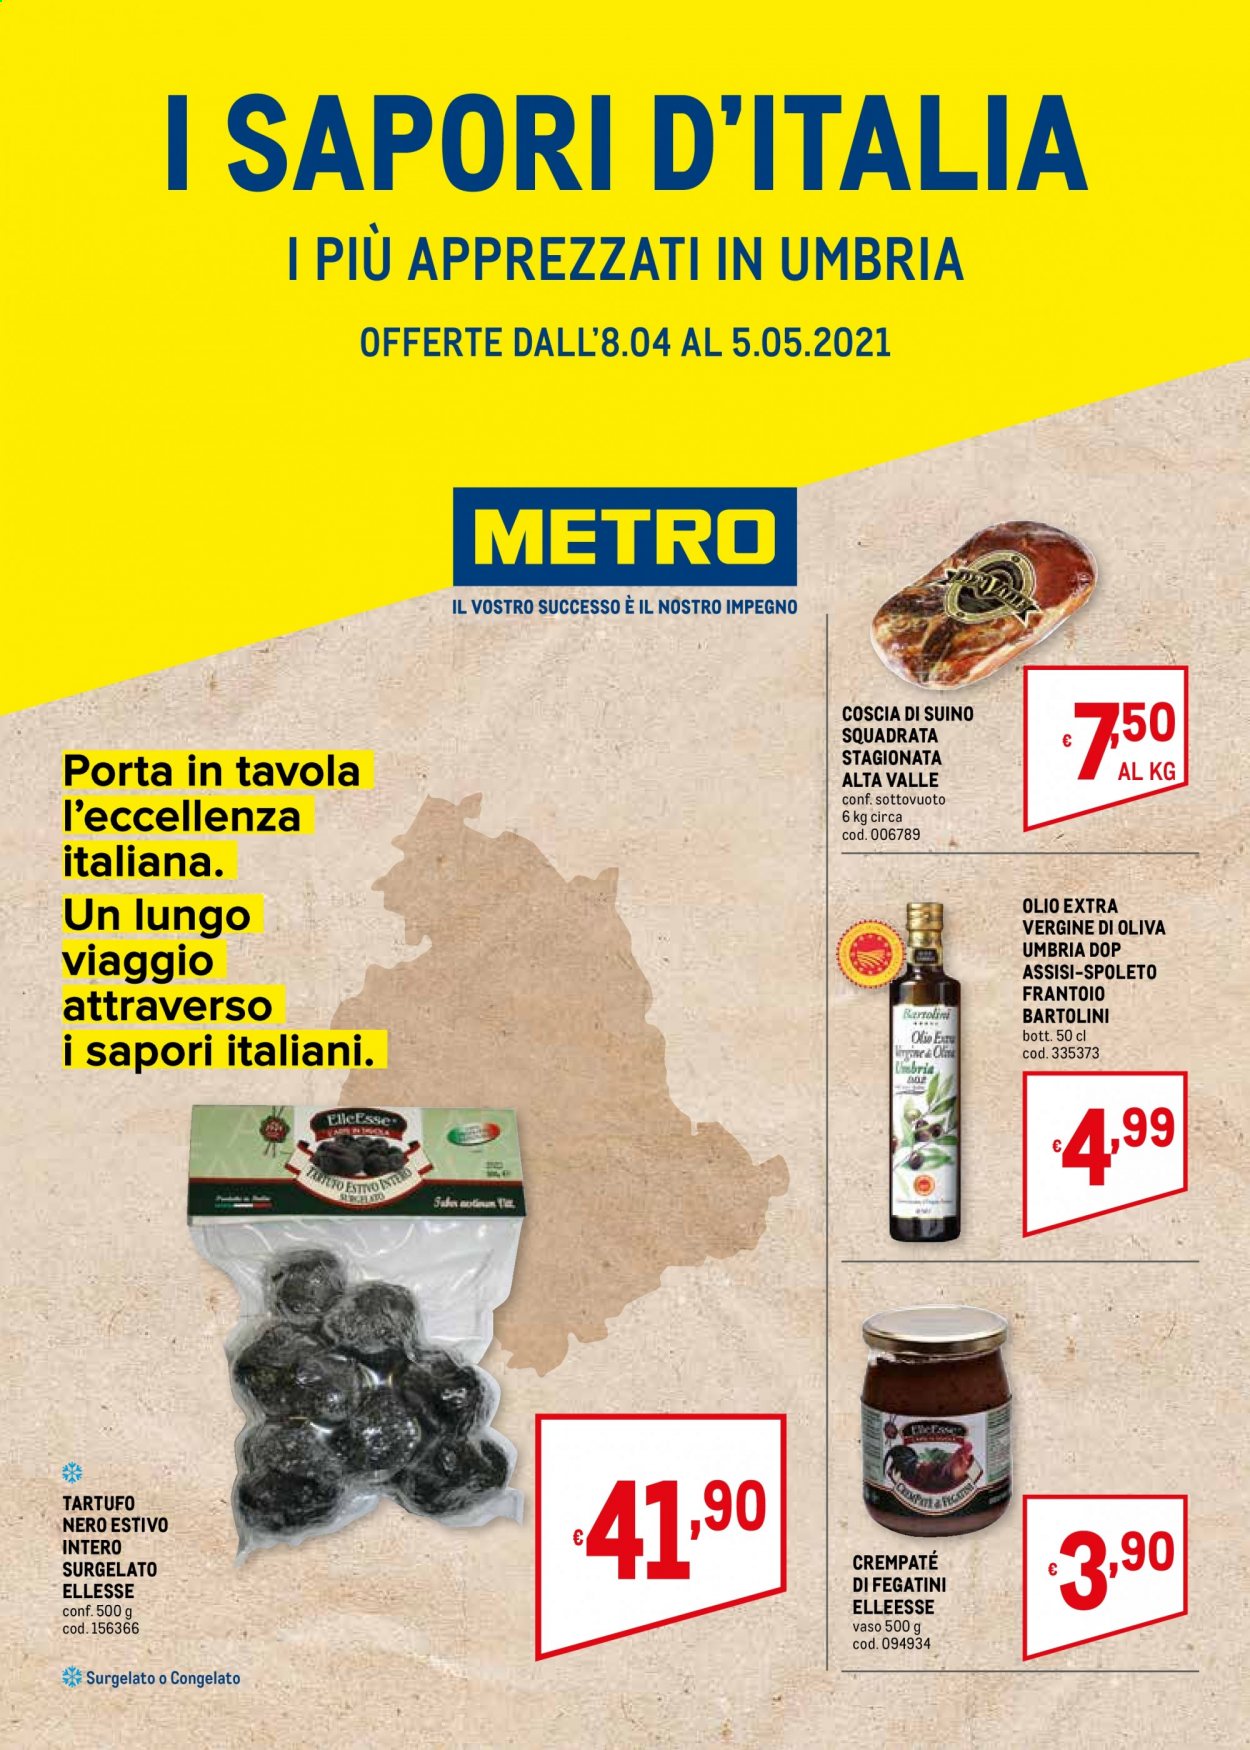 thumbnail - Volantino Metro - 8/4/2021 - 5/5/2021 - Prodotti in offerta - Ellesse, tartufo, suino, olio, olio extra vergine di oliva, vaso. Pagina 1.